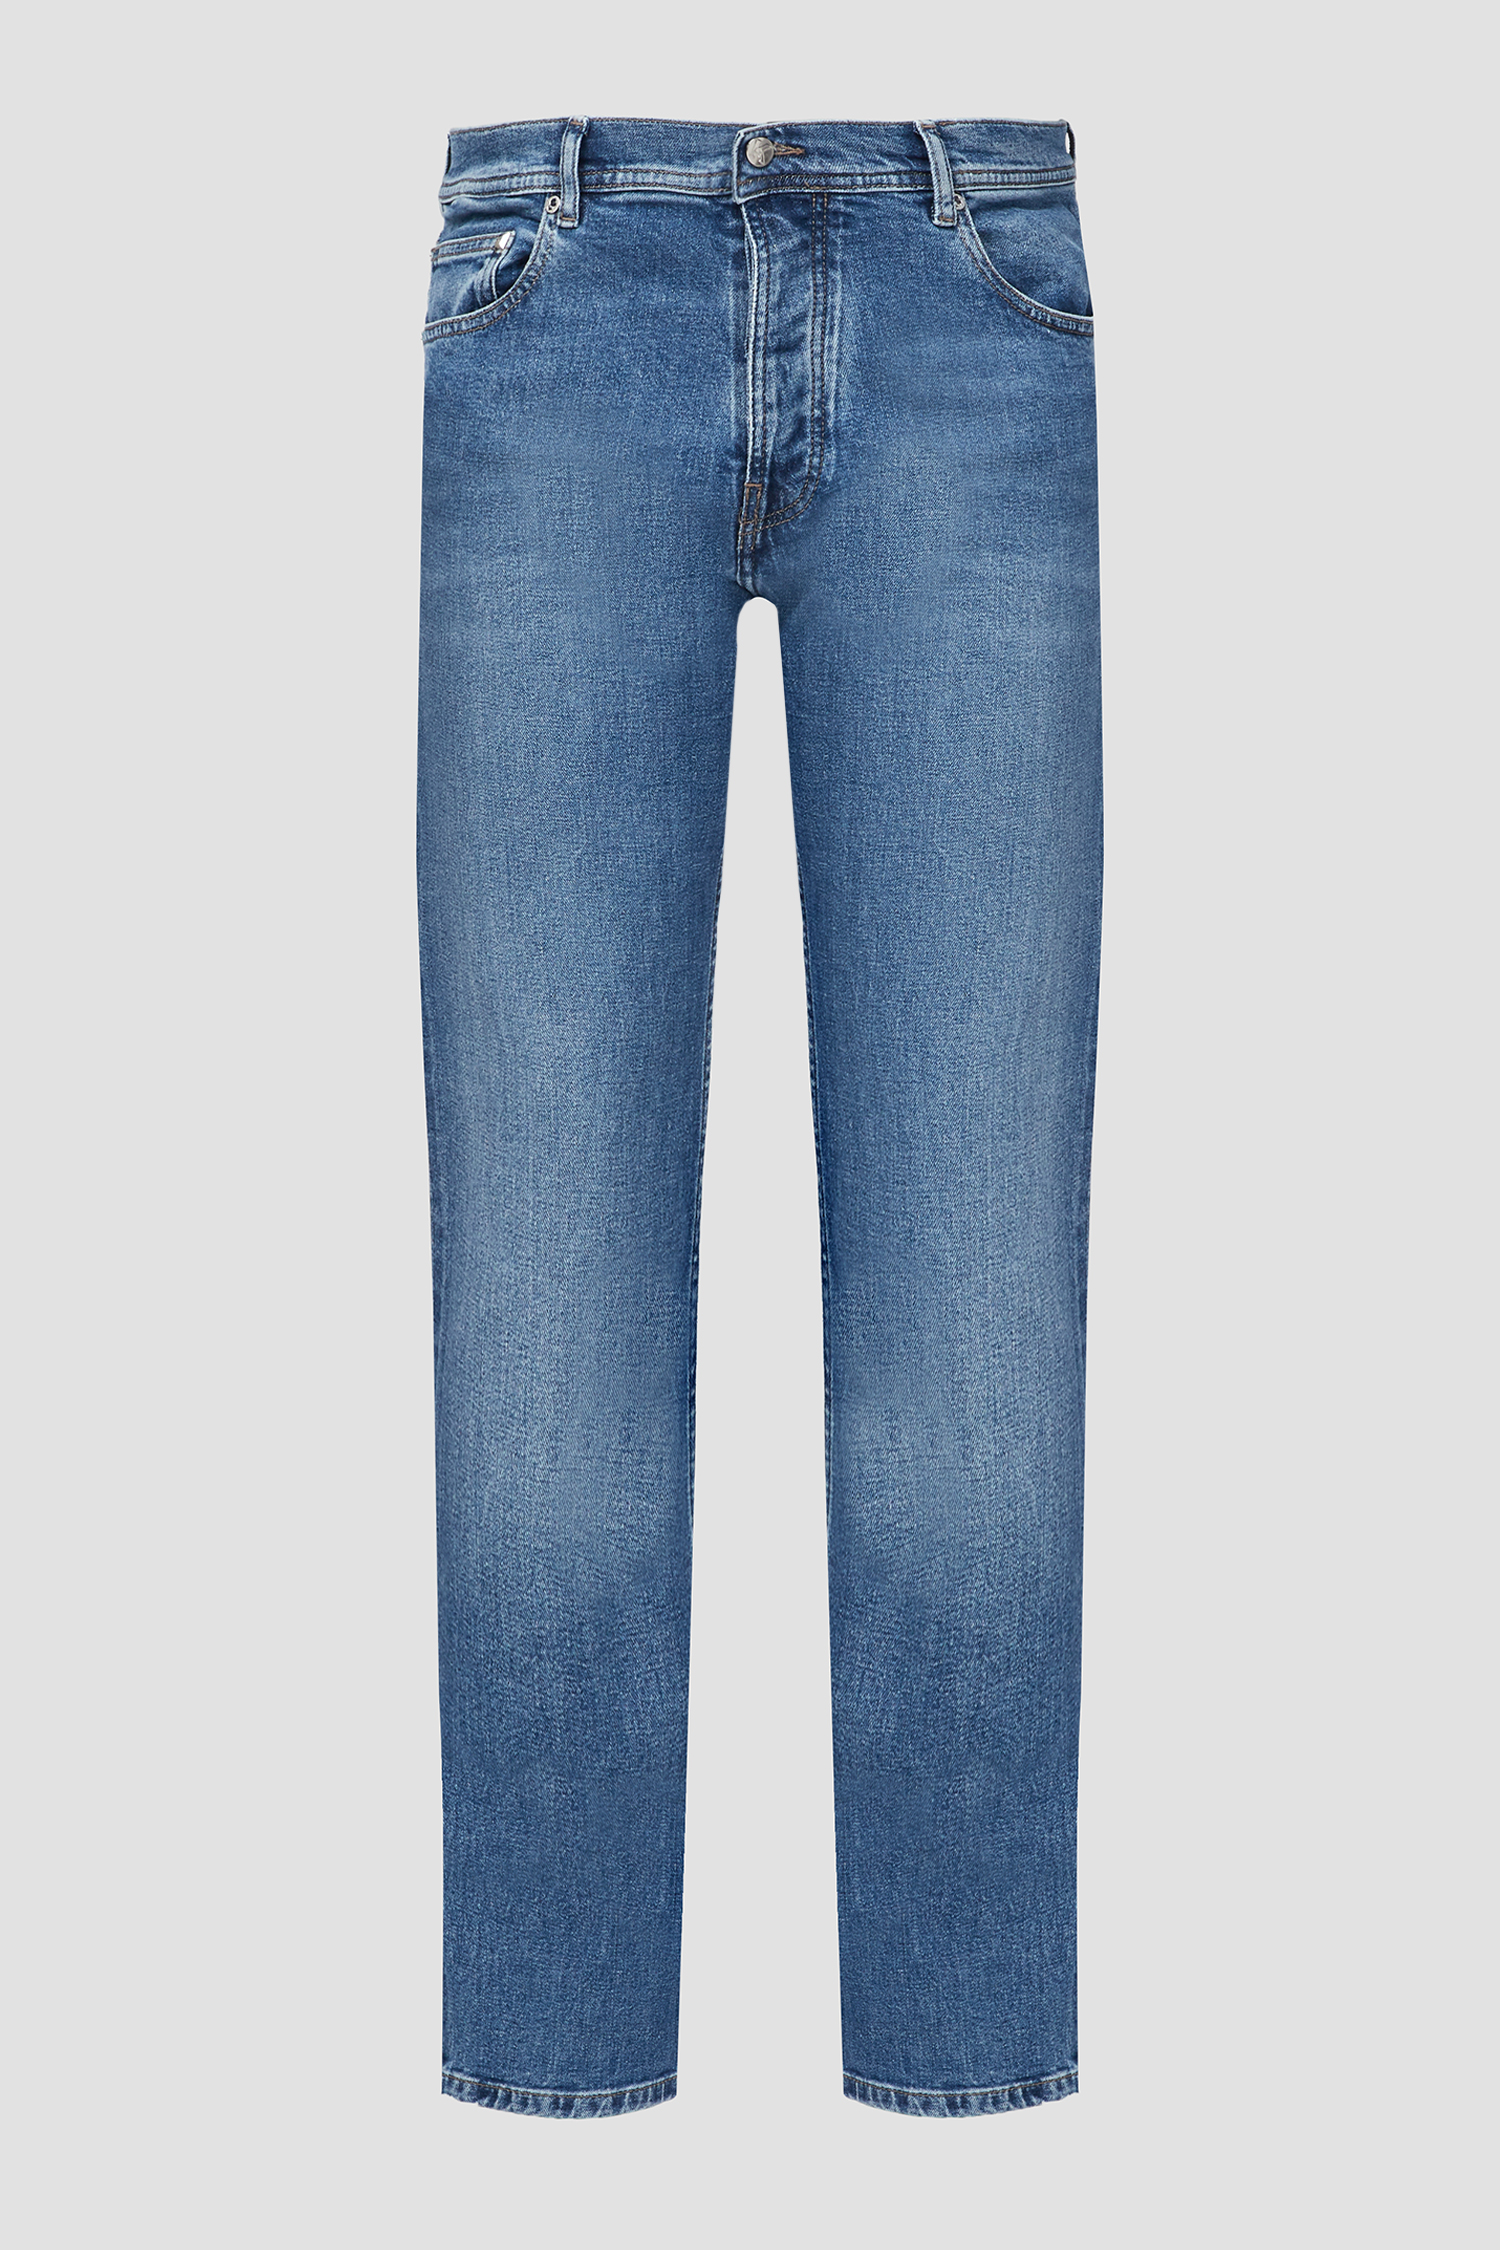 Мужские синие джинсы Karl Lagerfeld 532854.265855;670